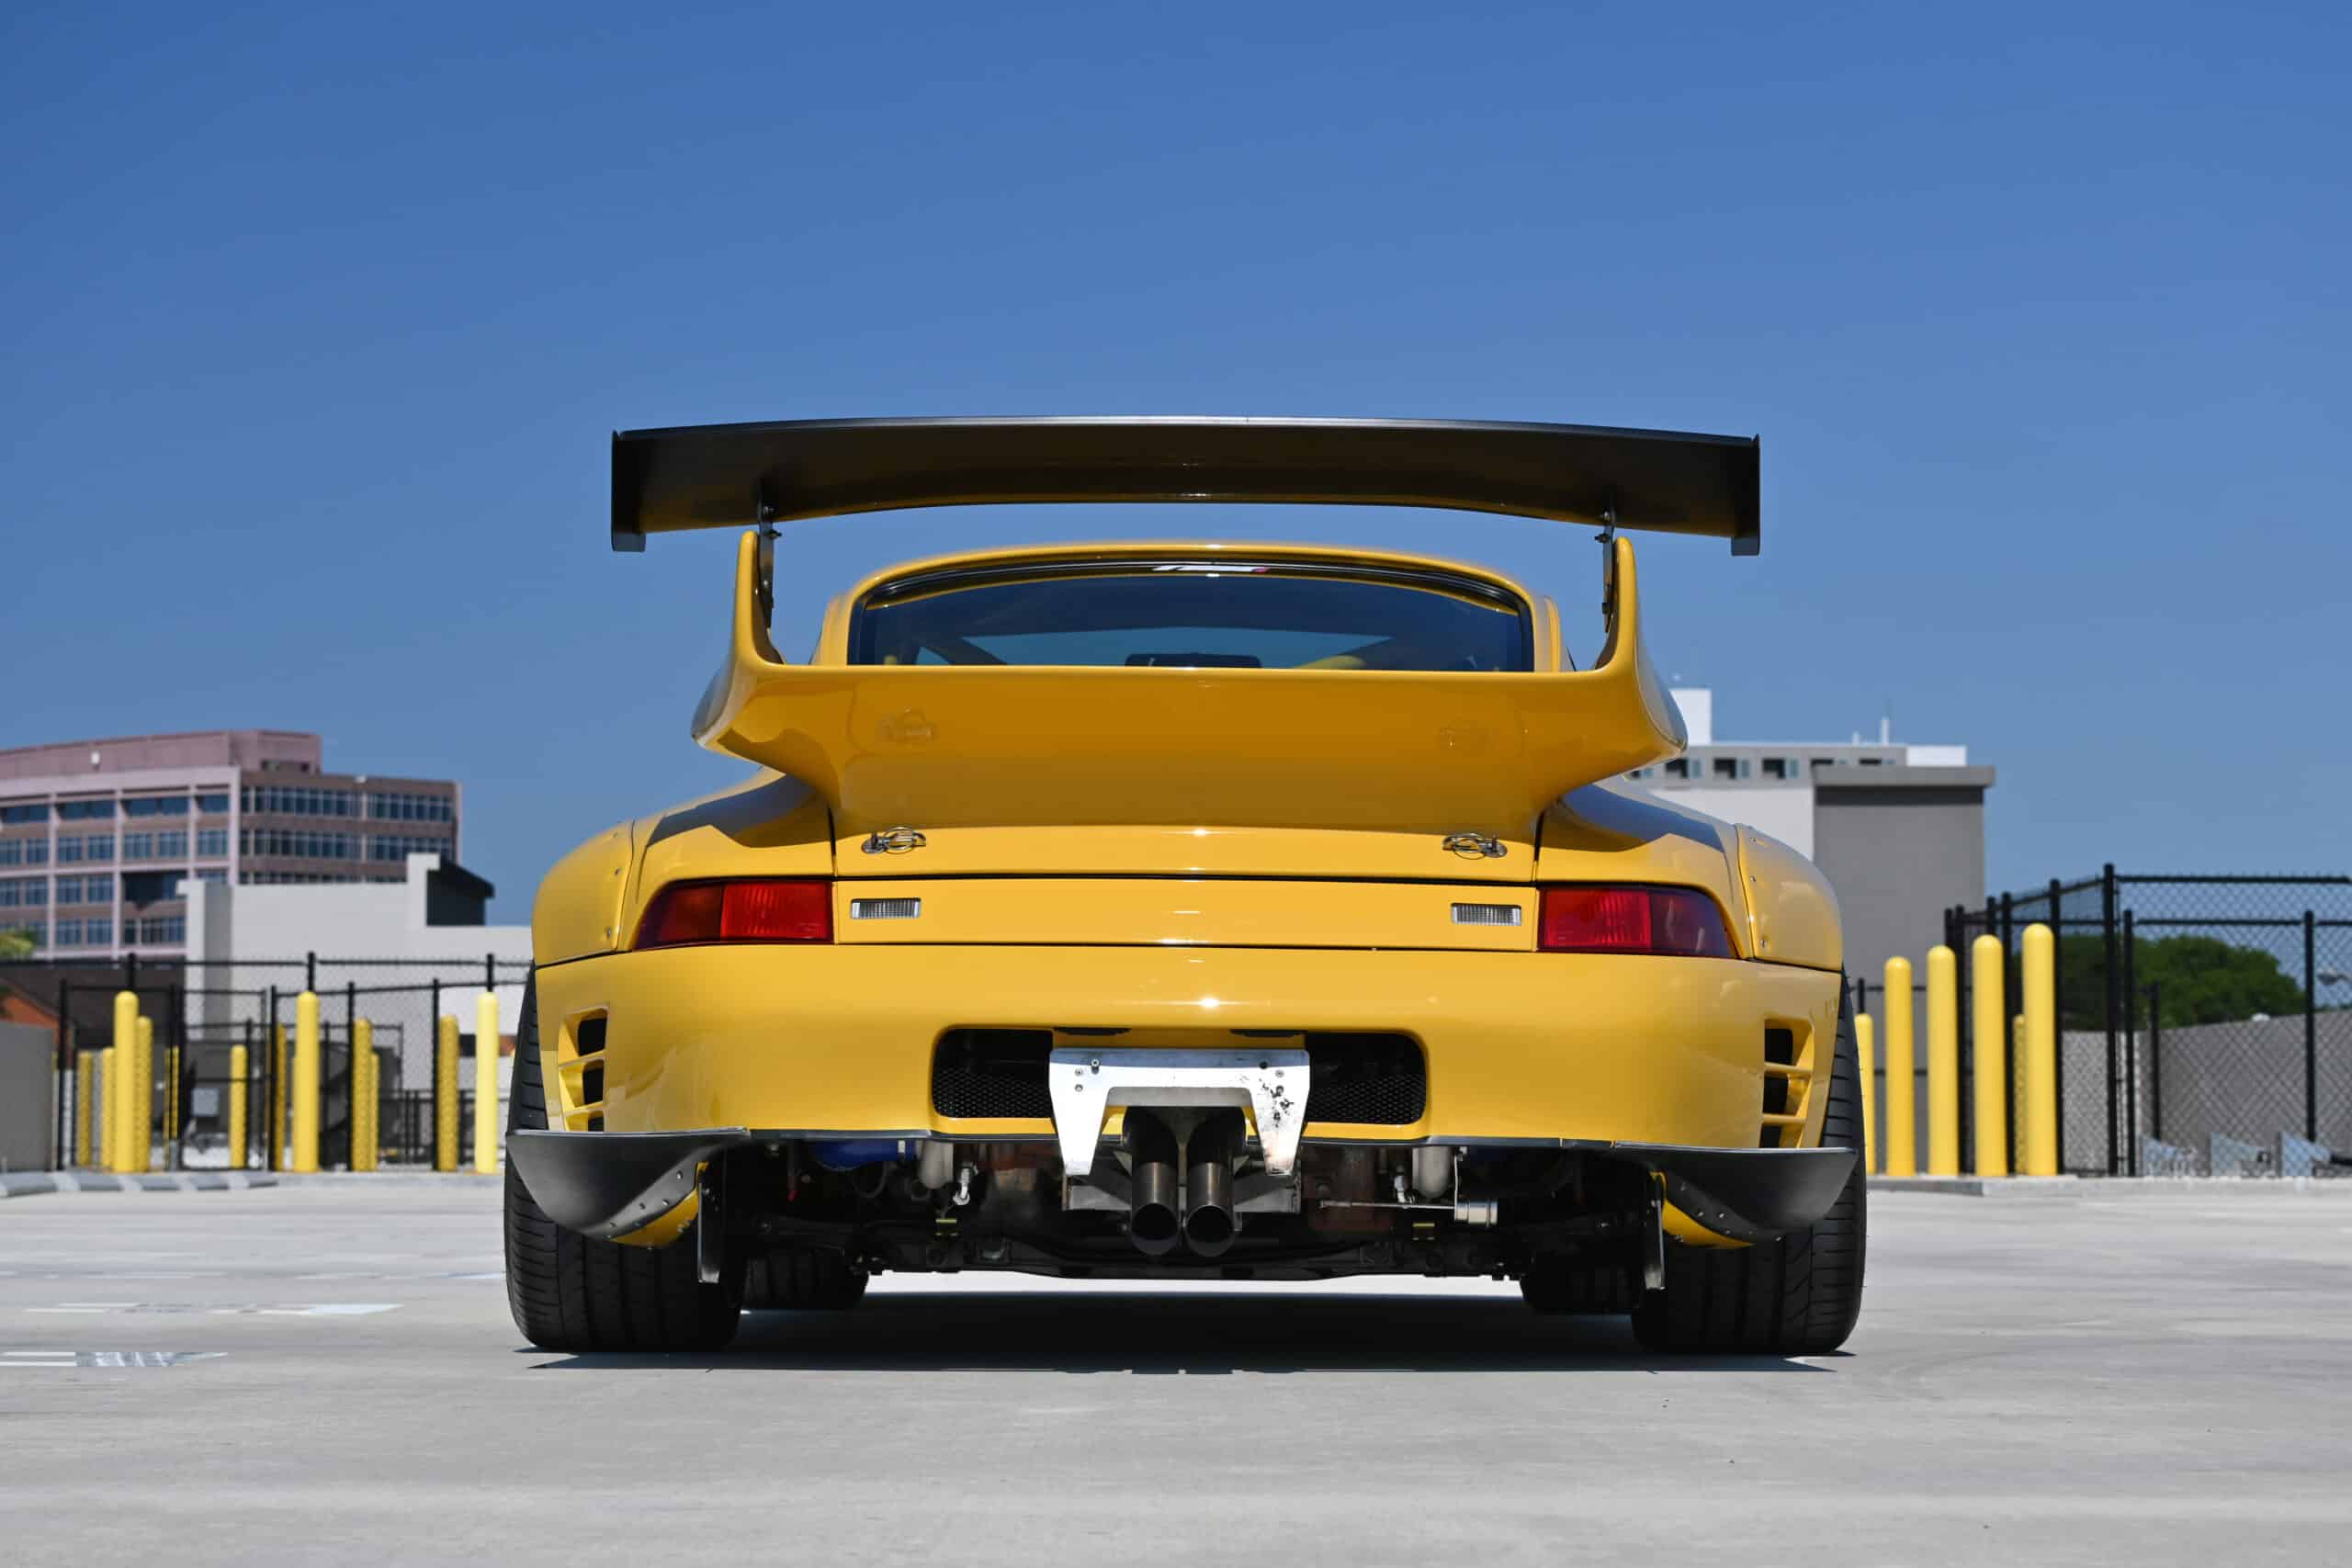 1996 Porsche 911 Turbo GT2 Spec /War ready/ Street Legal GT2 Evo spec build/ 600 hp 2600lb RWD / Factory Speed Yellow Sunroof delete / approx. 35k miles / accident free